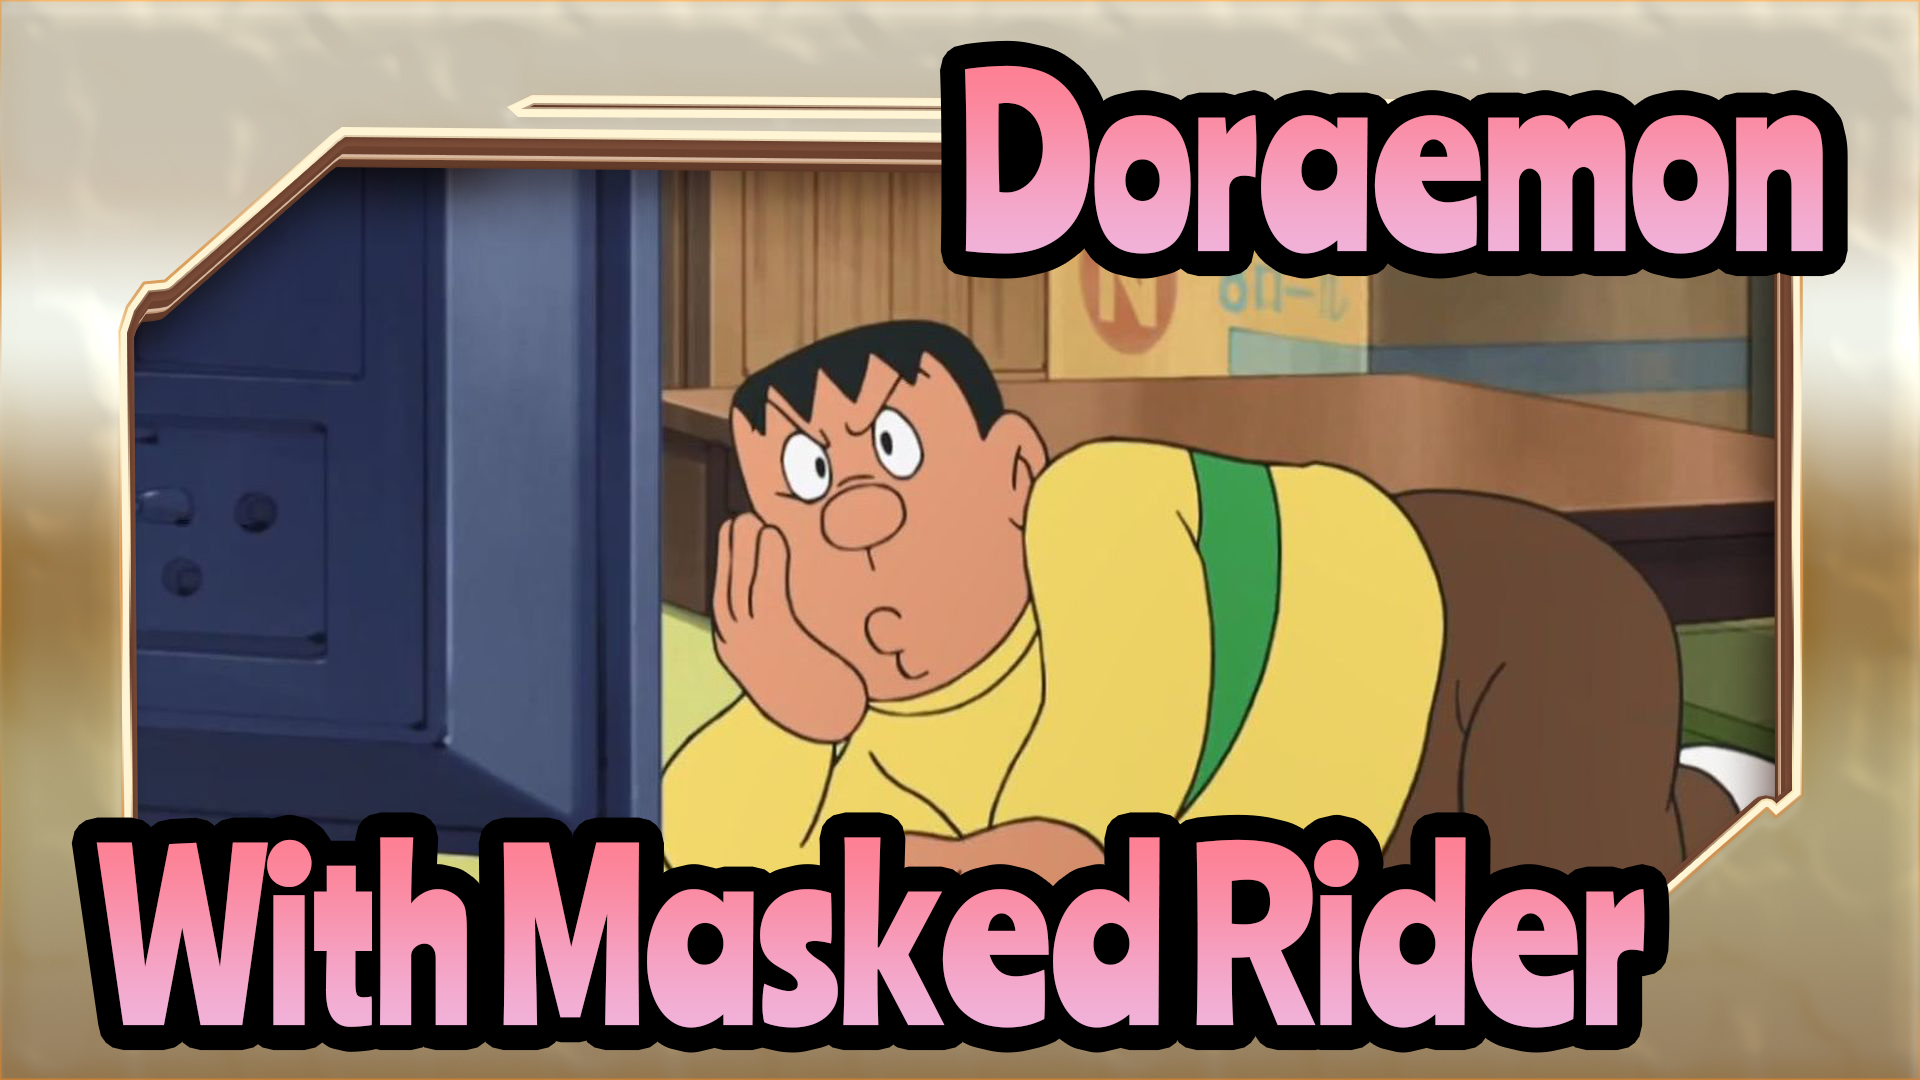 Doraemon] Doraemon With Kodoku no Gurume & Masked Rider, No, Turtle Masked  Rider LOL - Bilibili